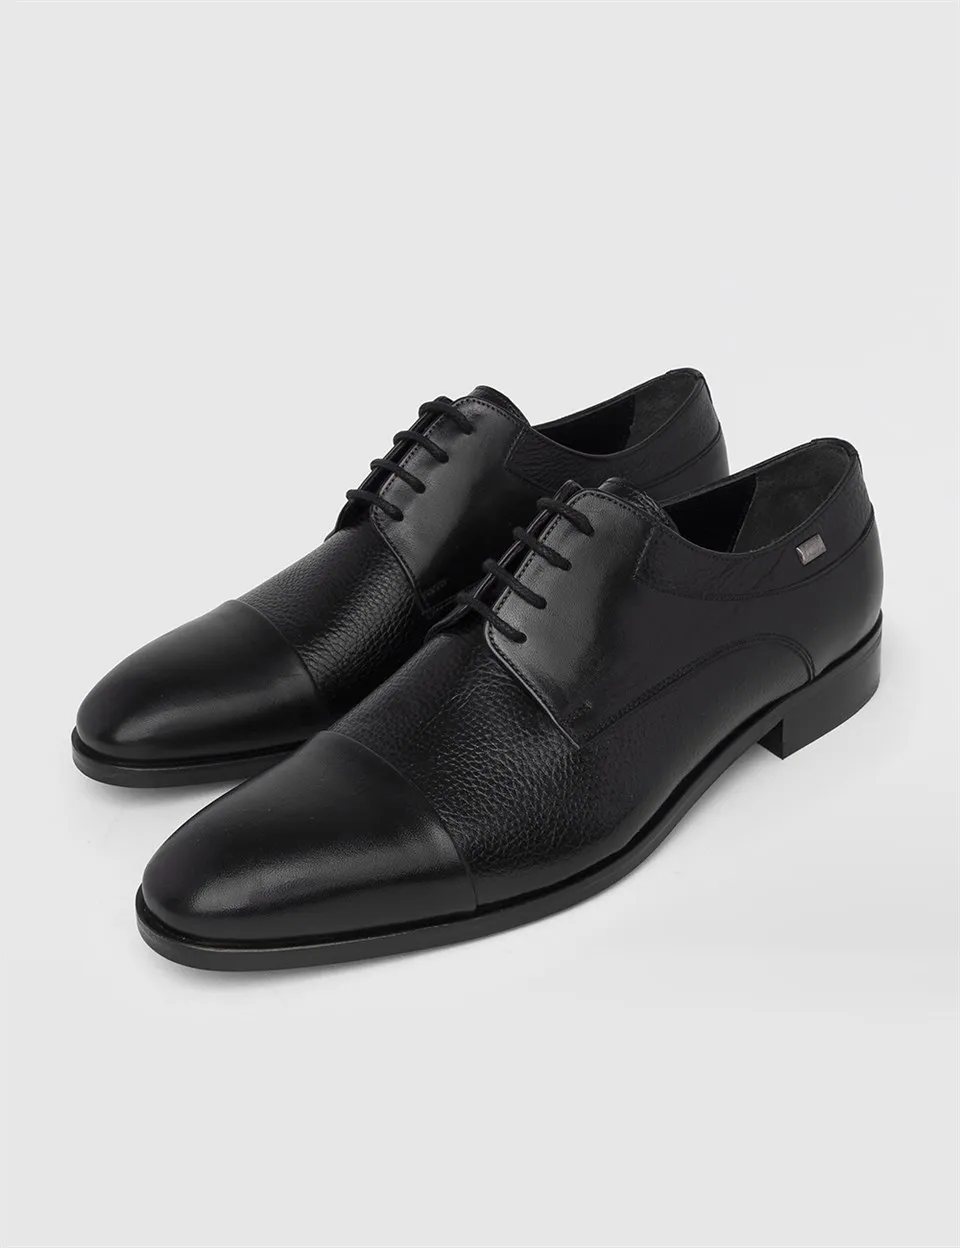 

ILVi-Genuine Leather Handmade Lund Black Floater Leather Men's Classic Shoe Men Shoes 2022 Spring/Summer